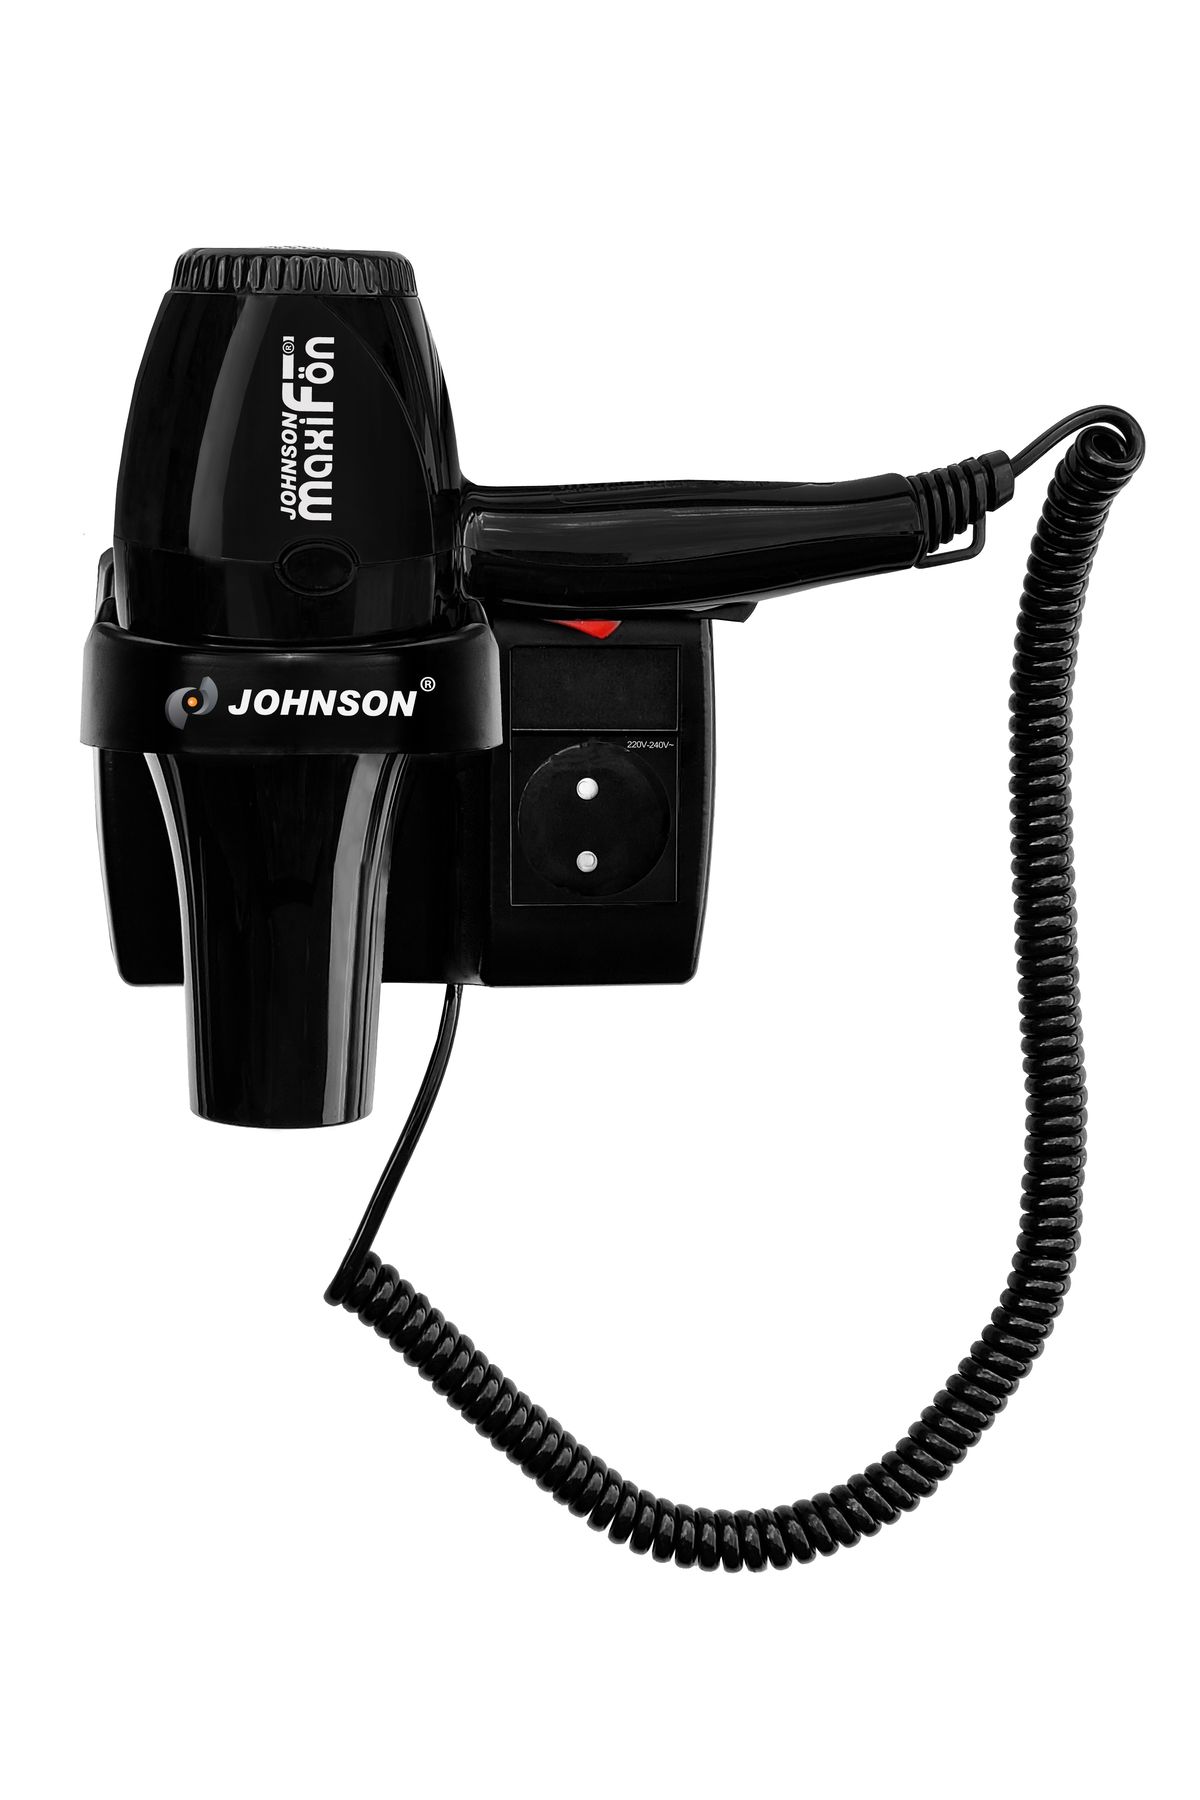 Johnson MaxiFön 220v Priz Çıkışlı Otel Tipi Saç Kurutma Makinesi 1600W Siyah